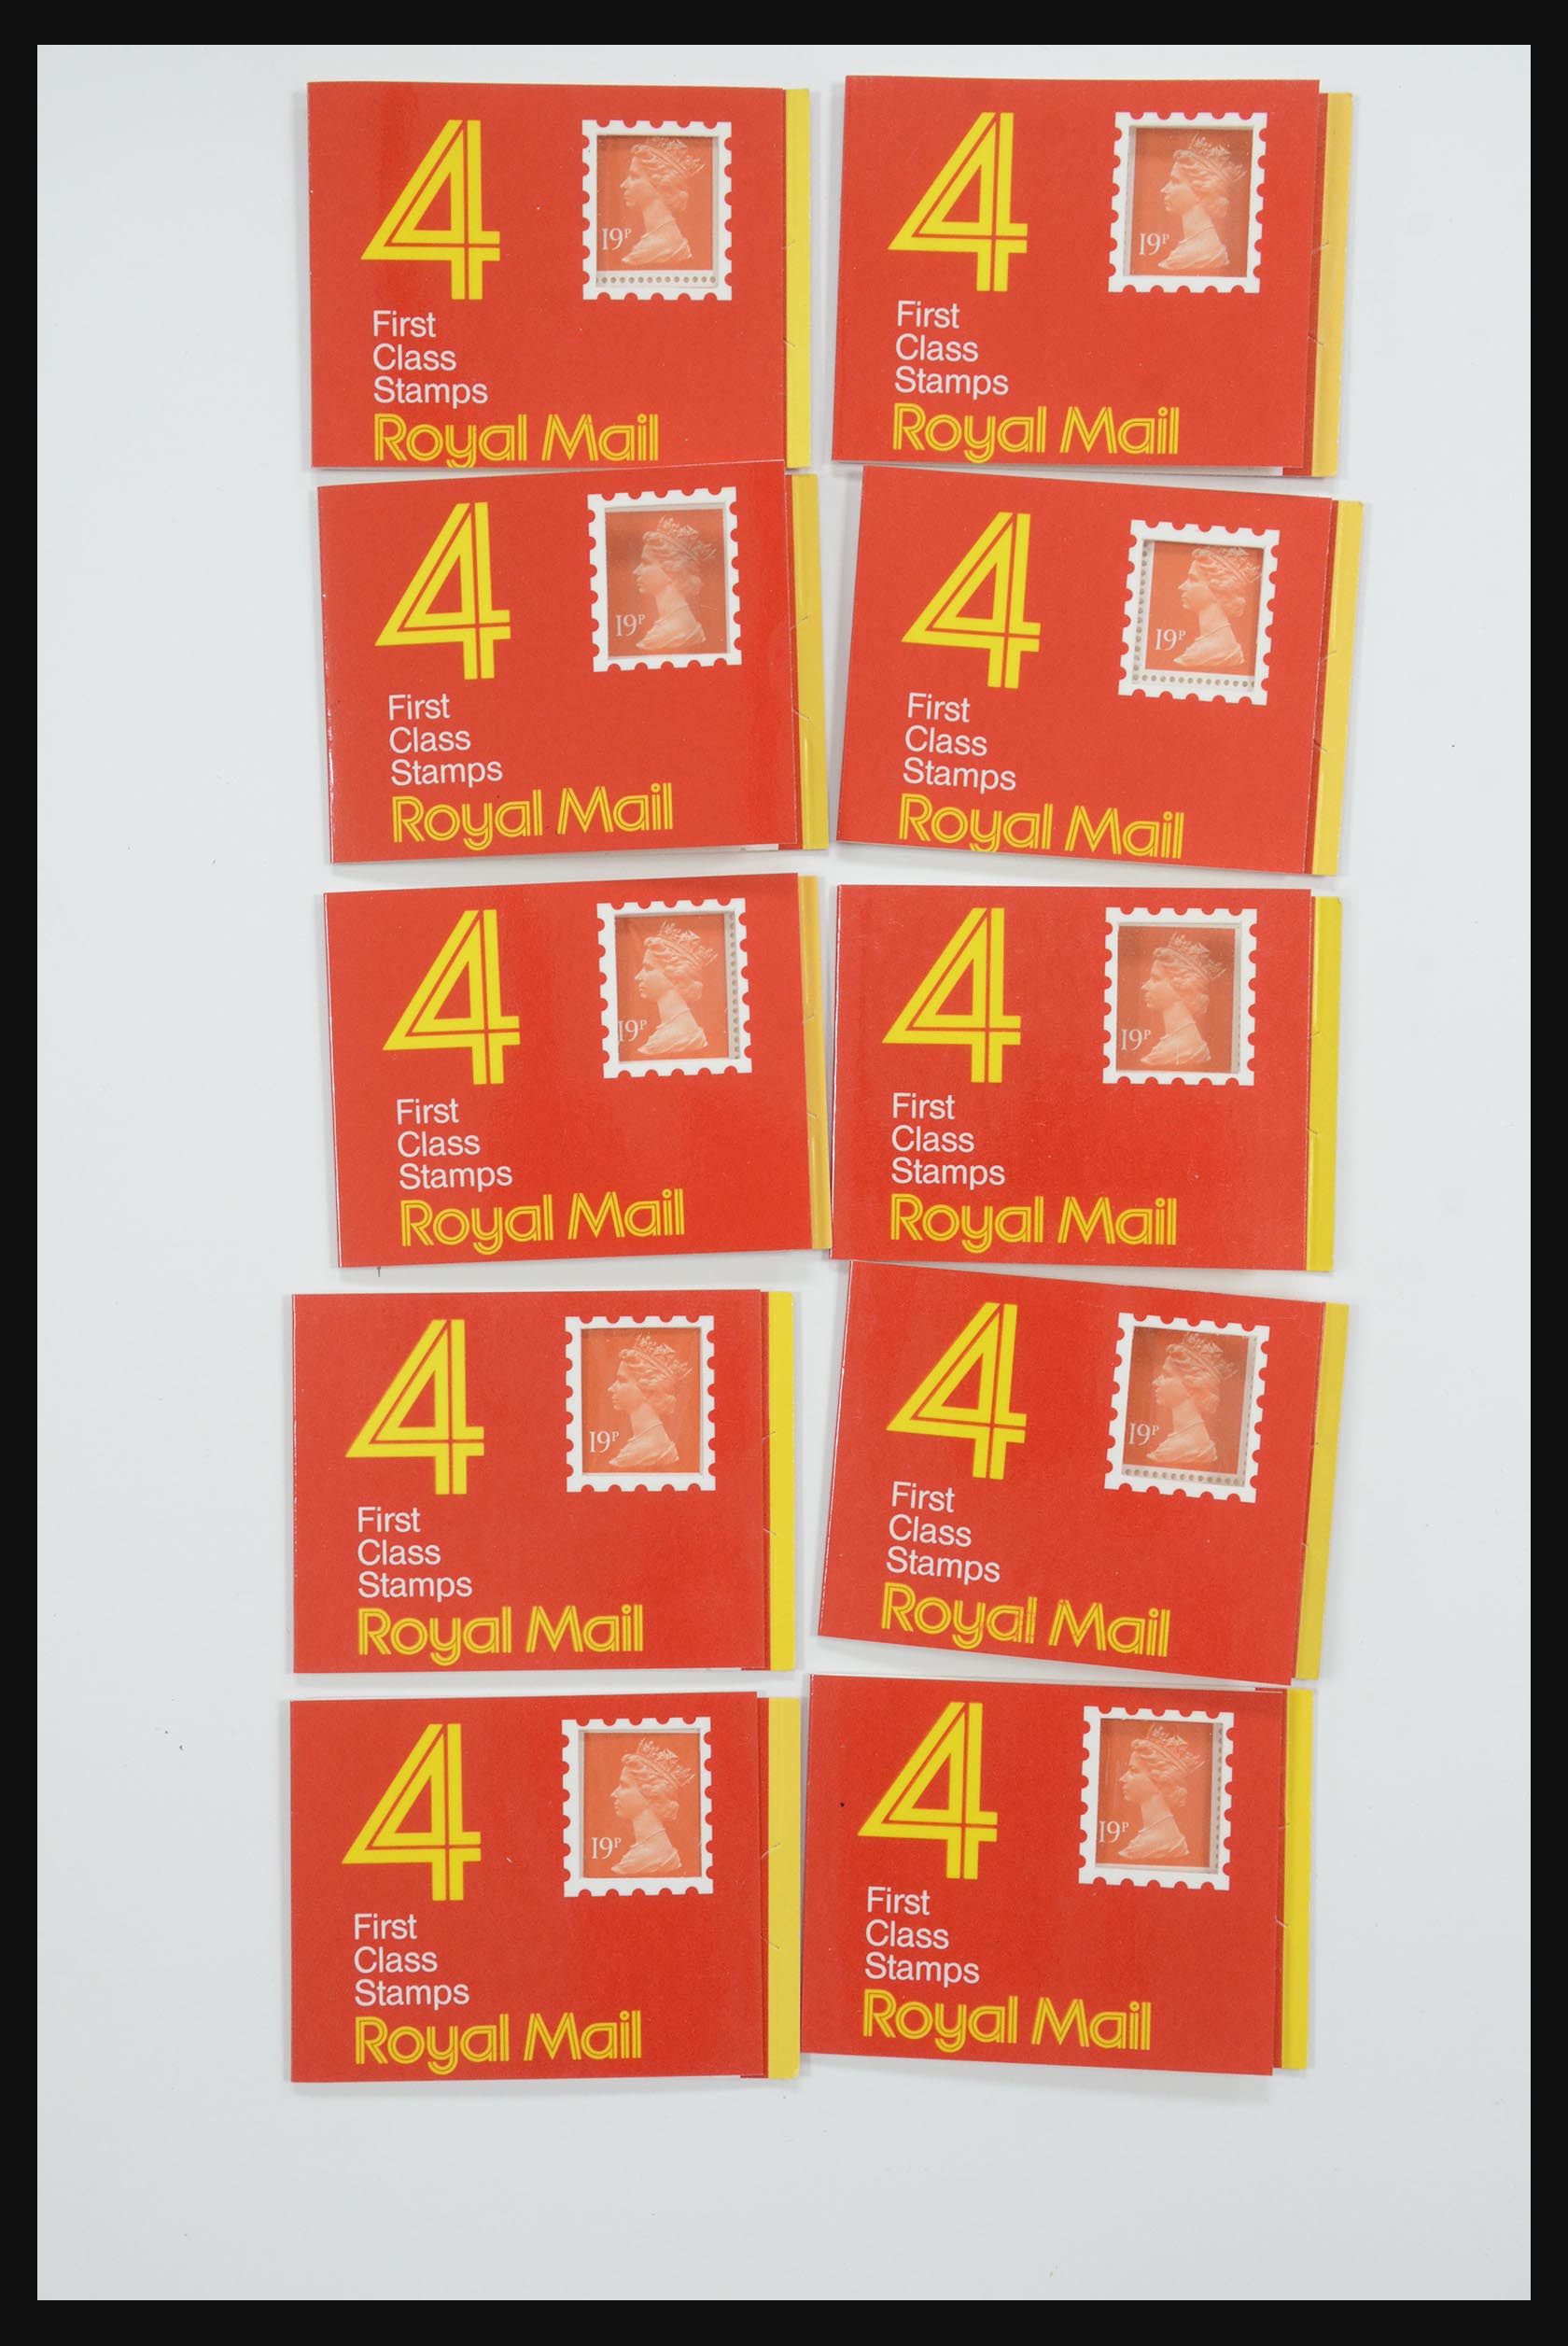 31961 063 - 31961 Great Britain stampbooklets 1971-1999.